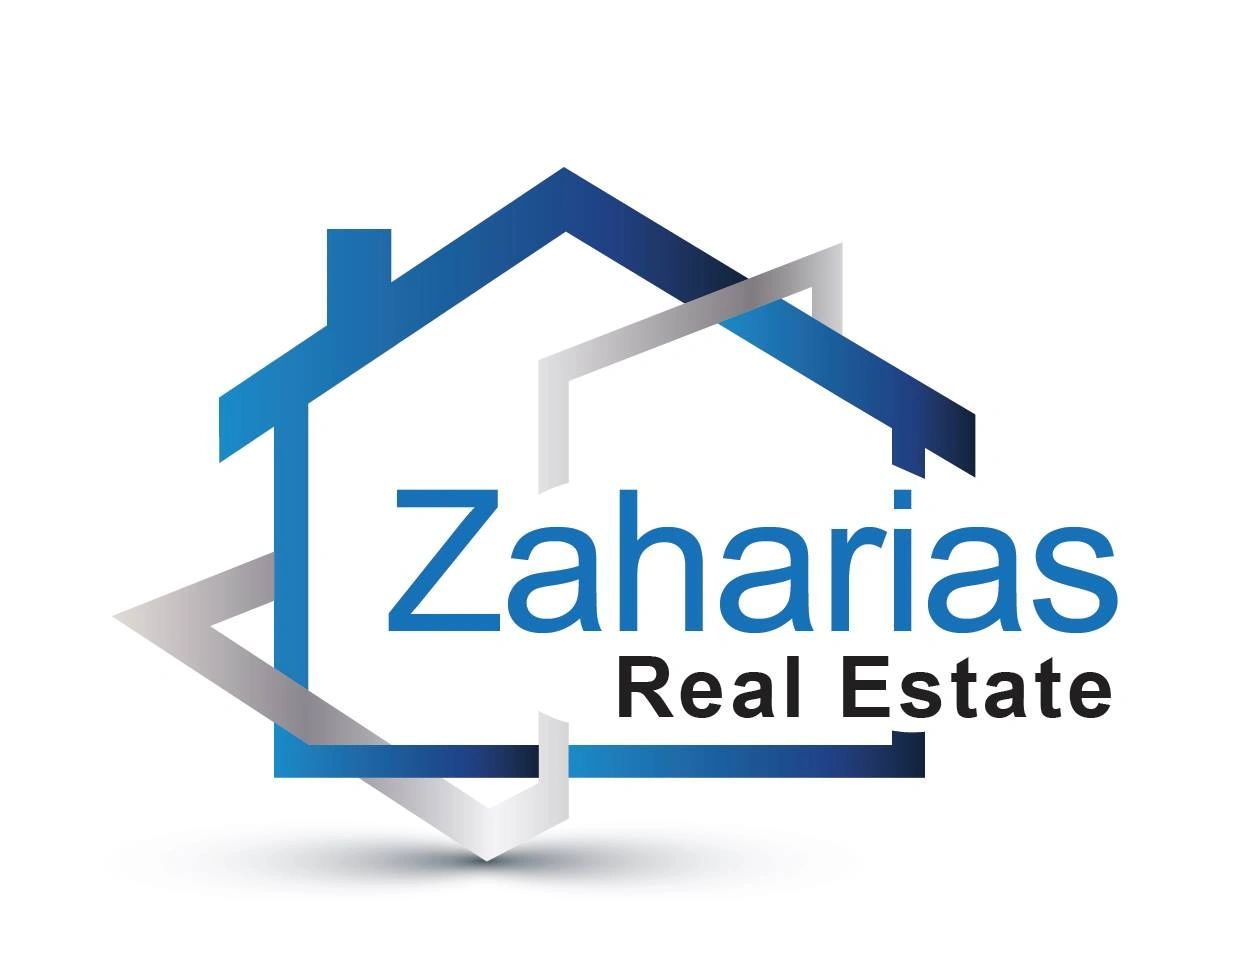 Zaharias Real Estate logo. Join our team.

